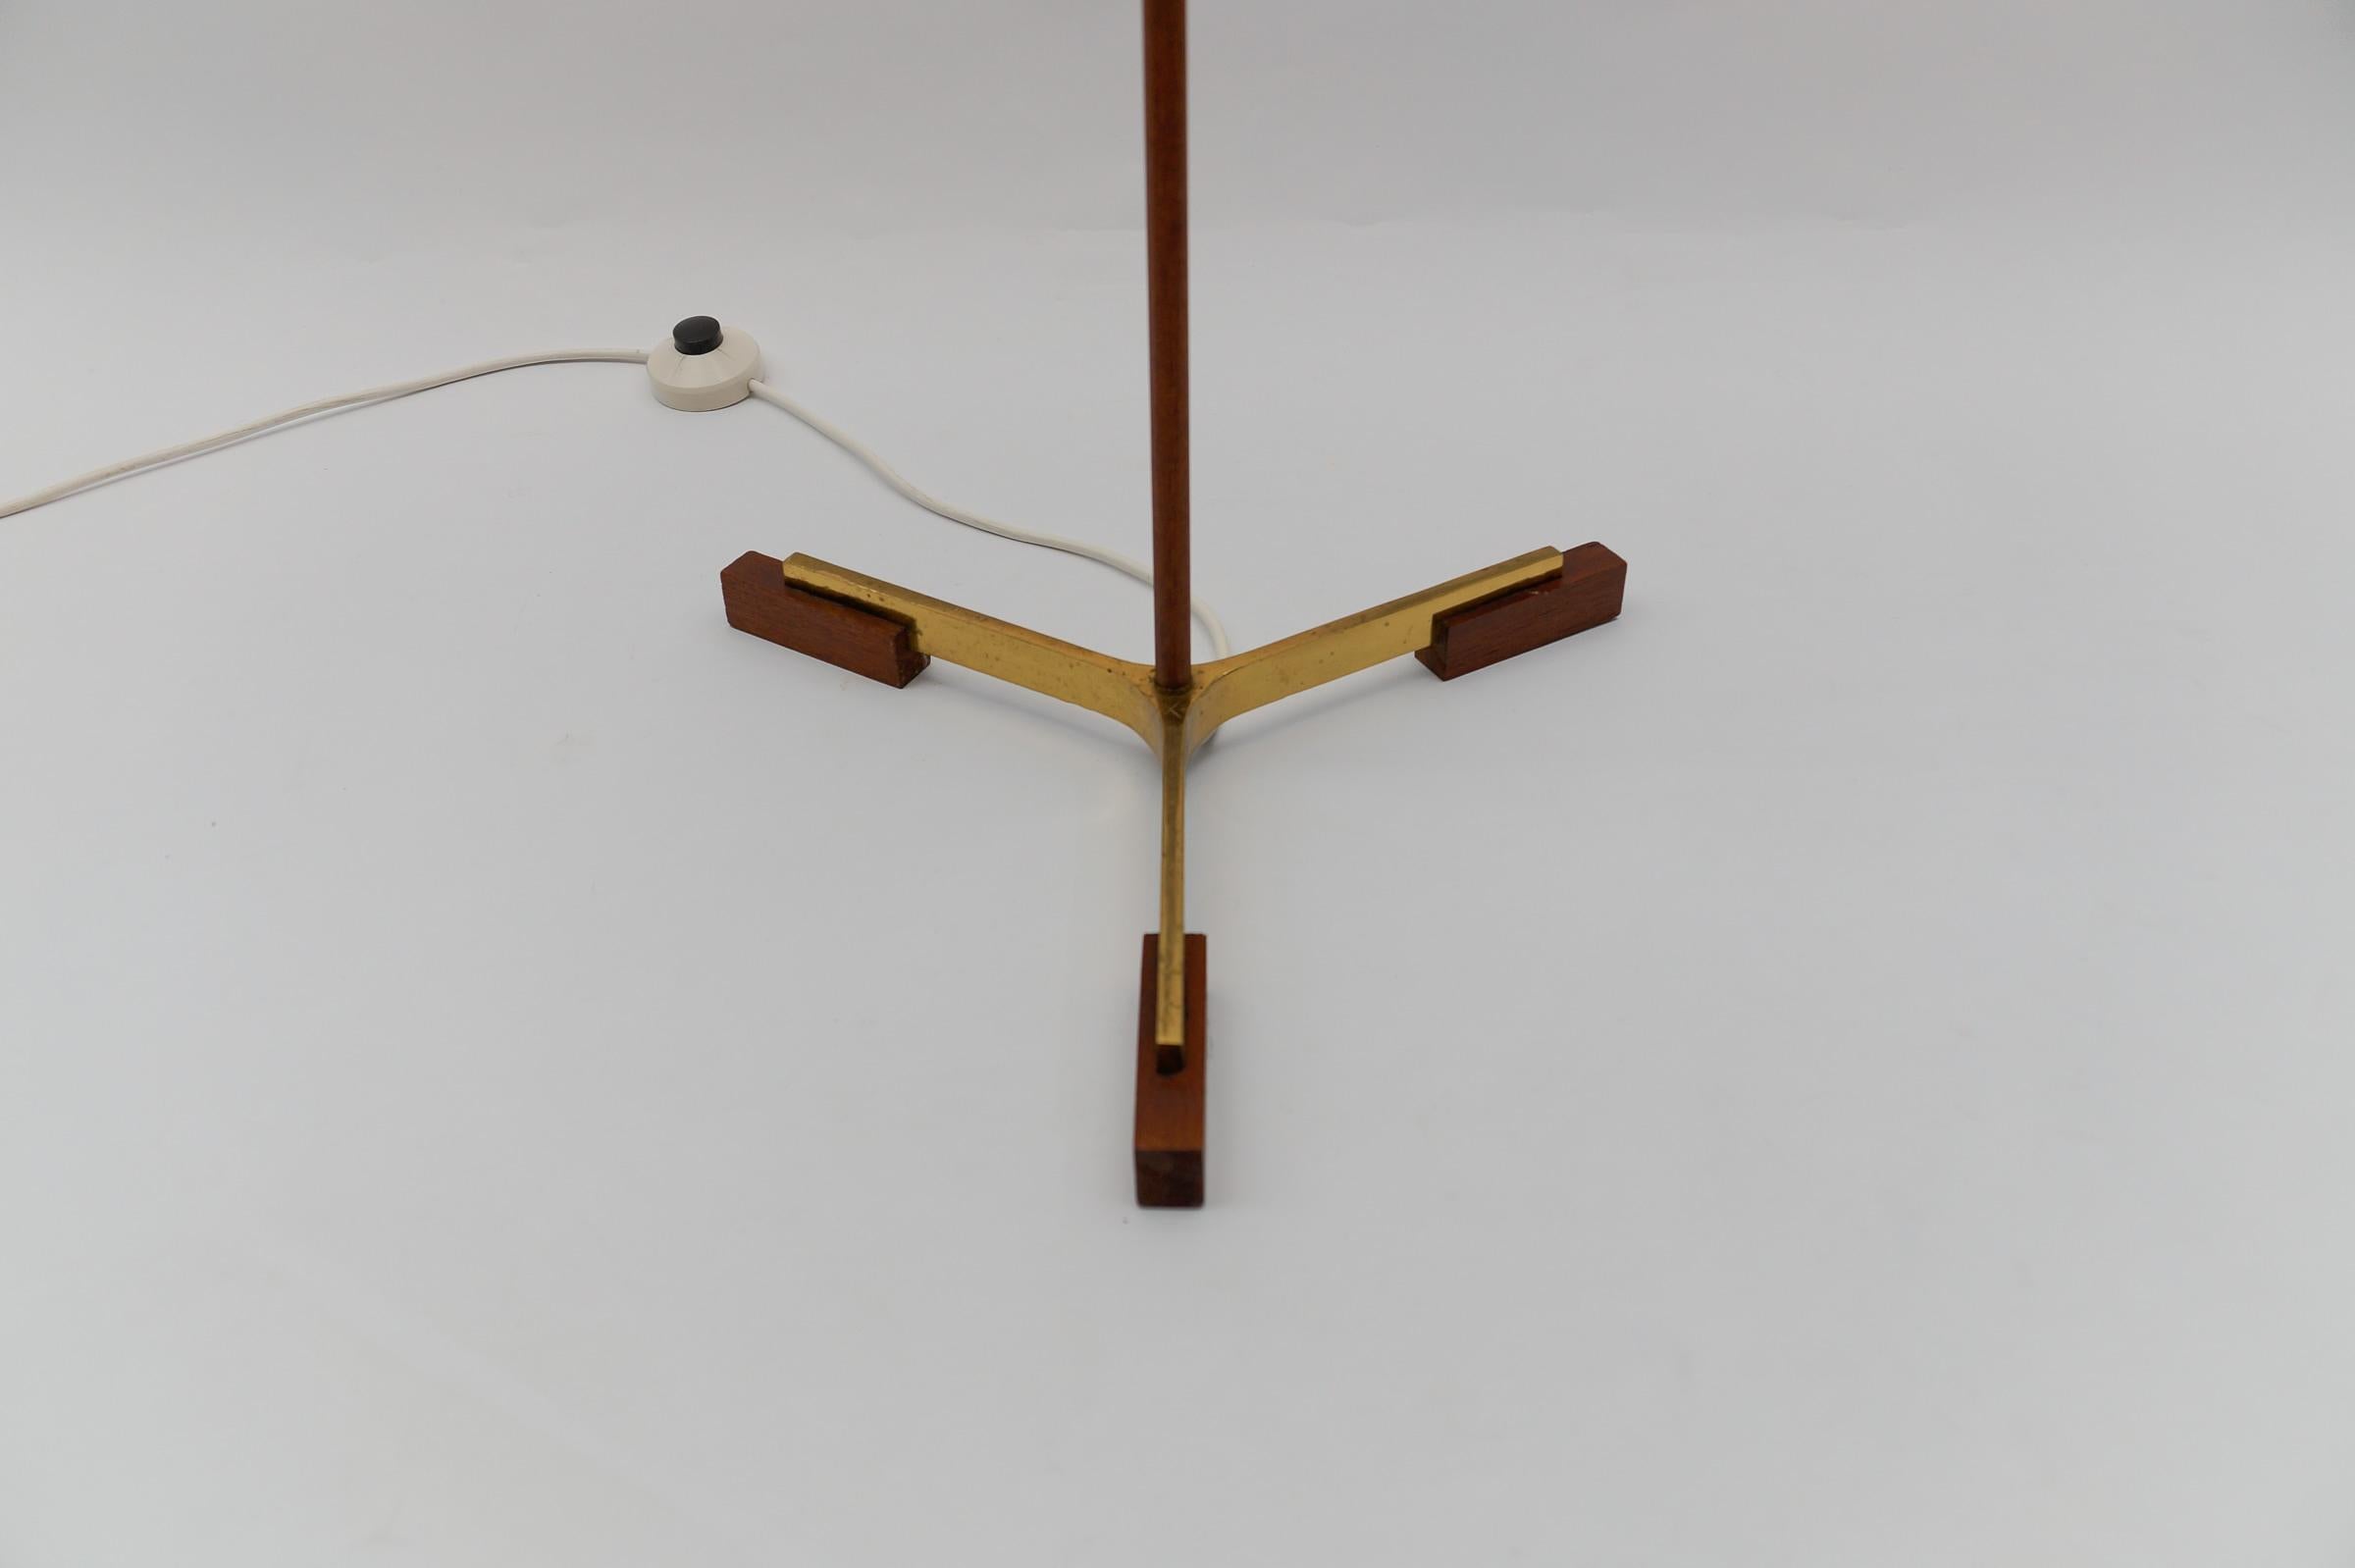  Mid-Century Modern Floor Lamp in Brass and Teak from Temde, 1960s Switzerland For Sale 9